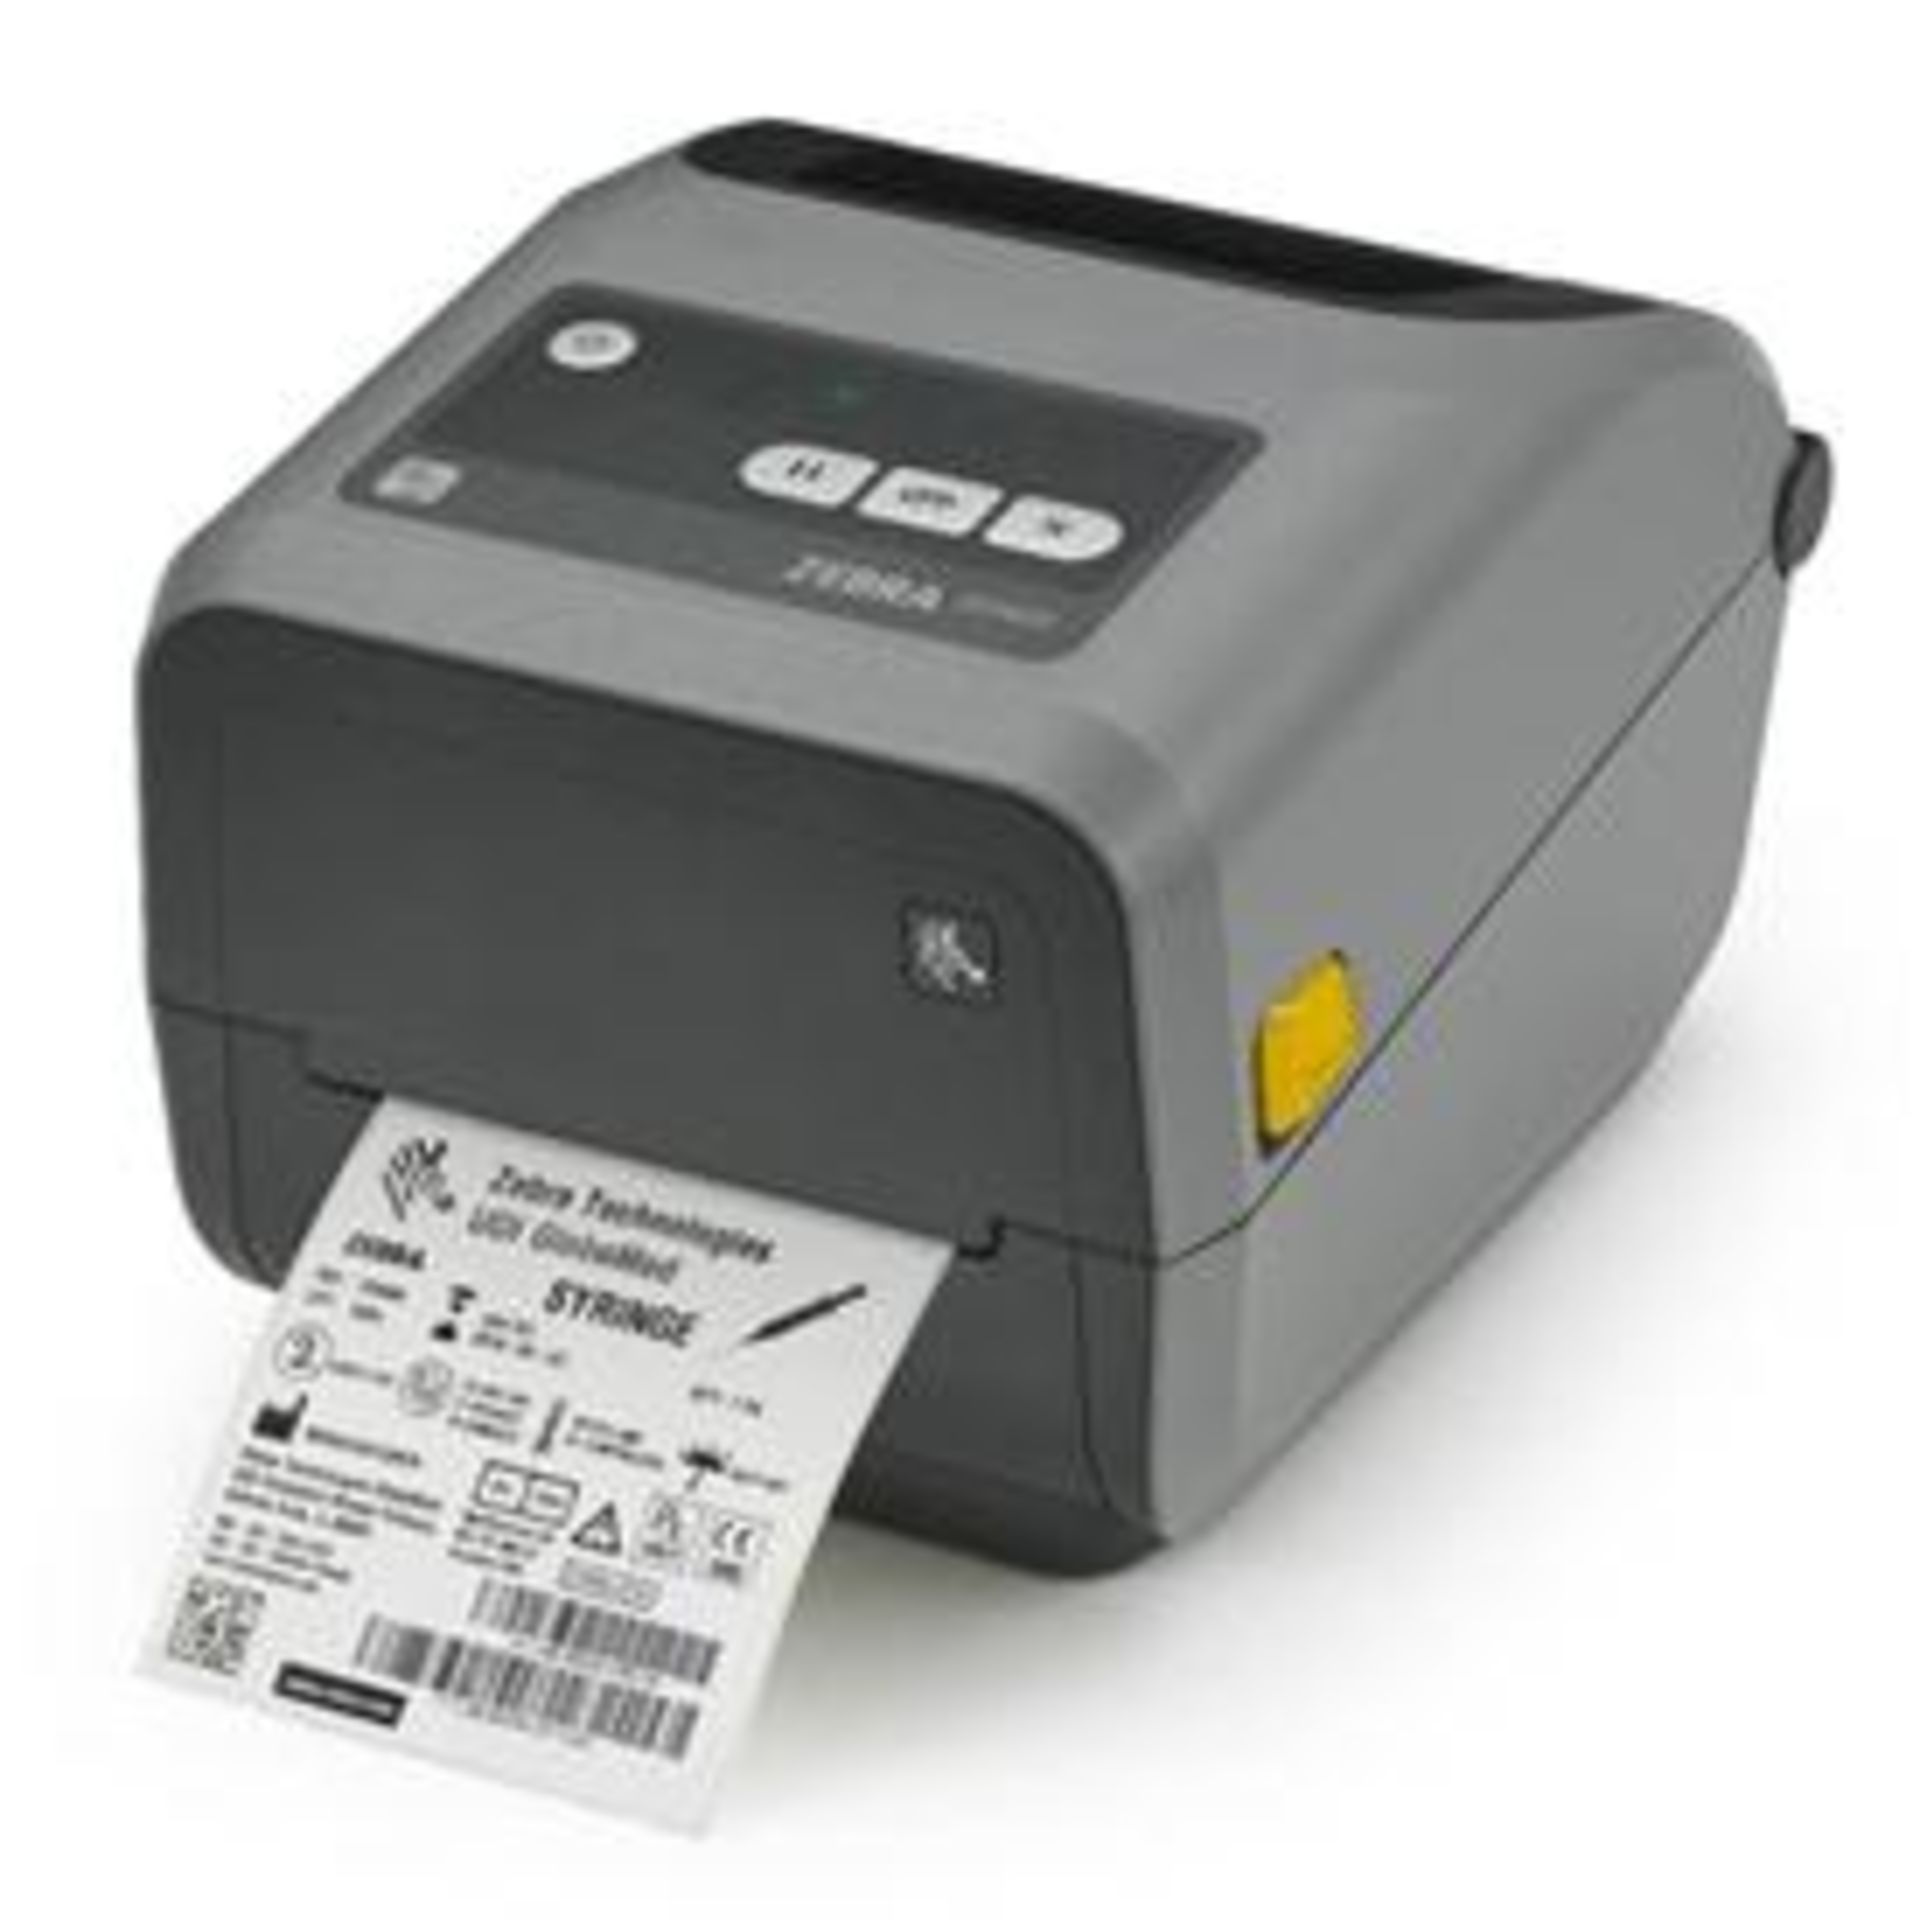 1 x Zebra ZD420 Thermal Transfer Label Printer - 203 dpi - USB and Ethernet - Unused With Original